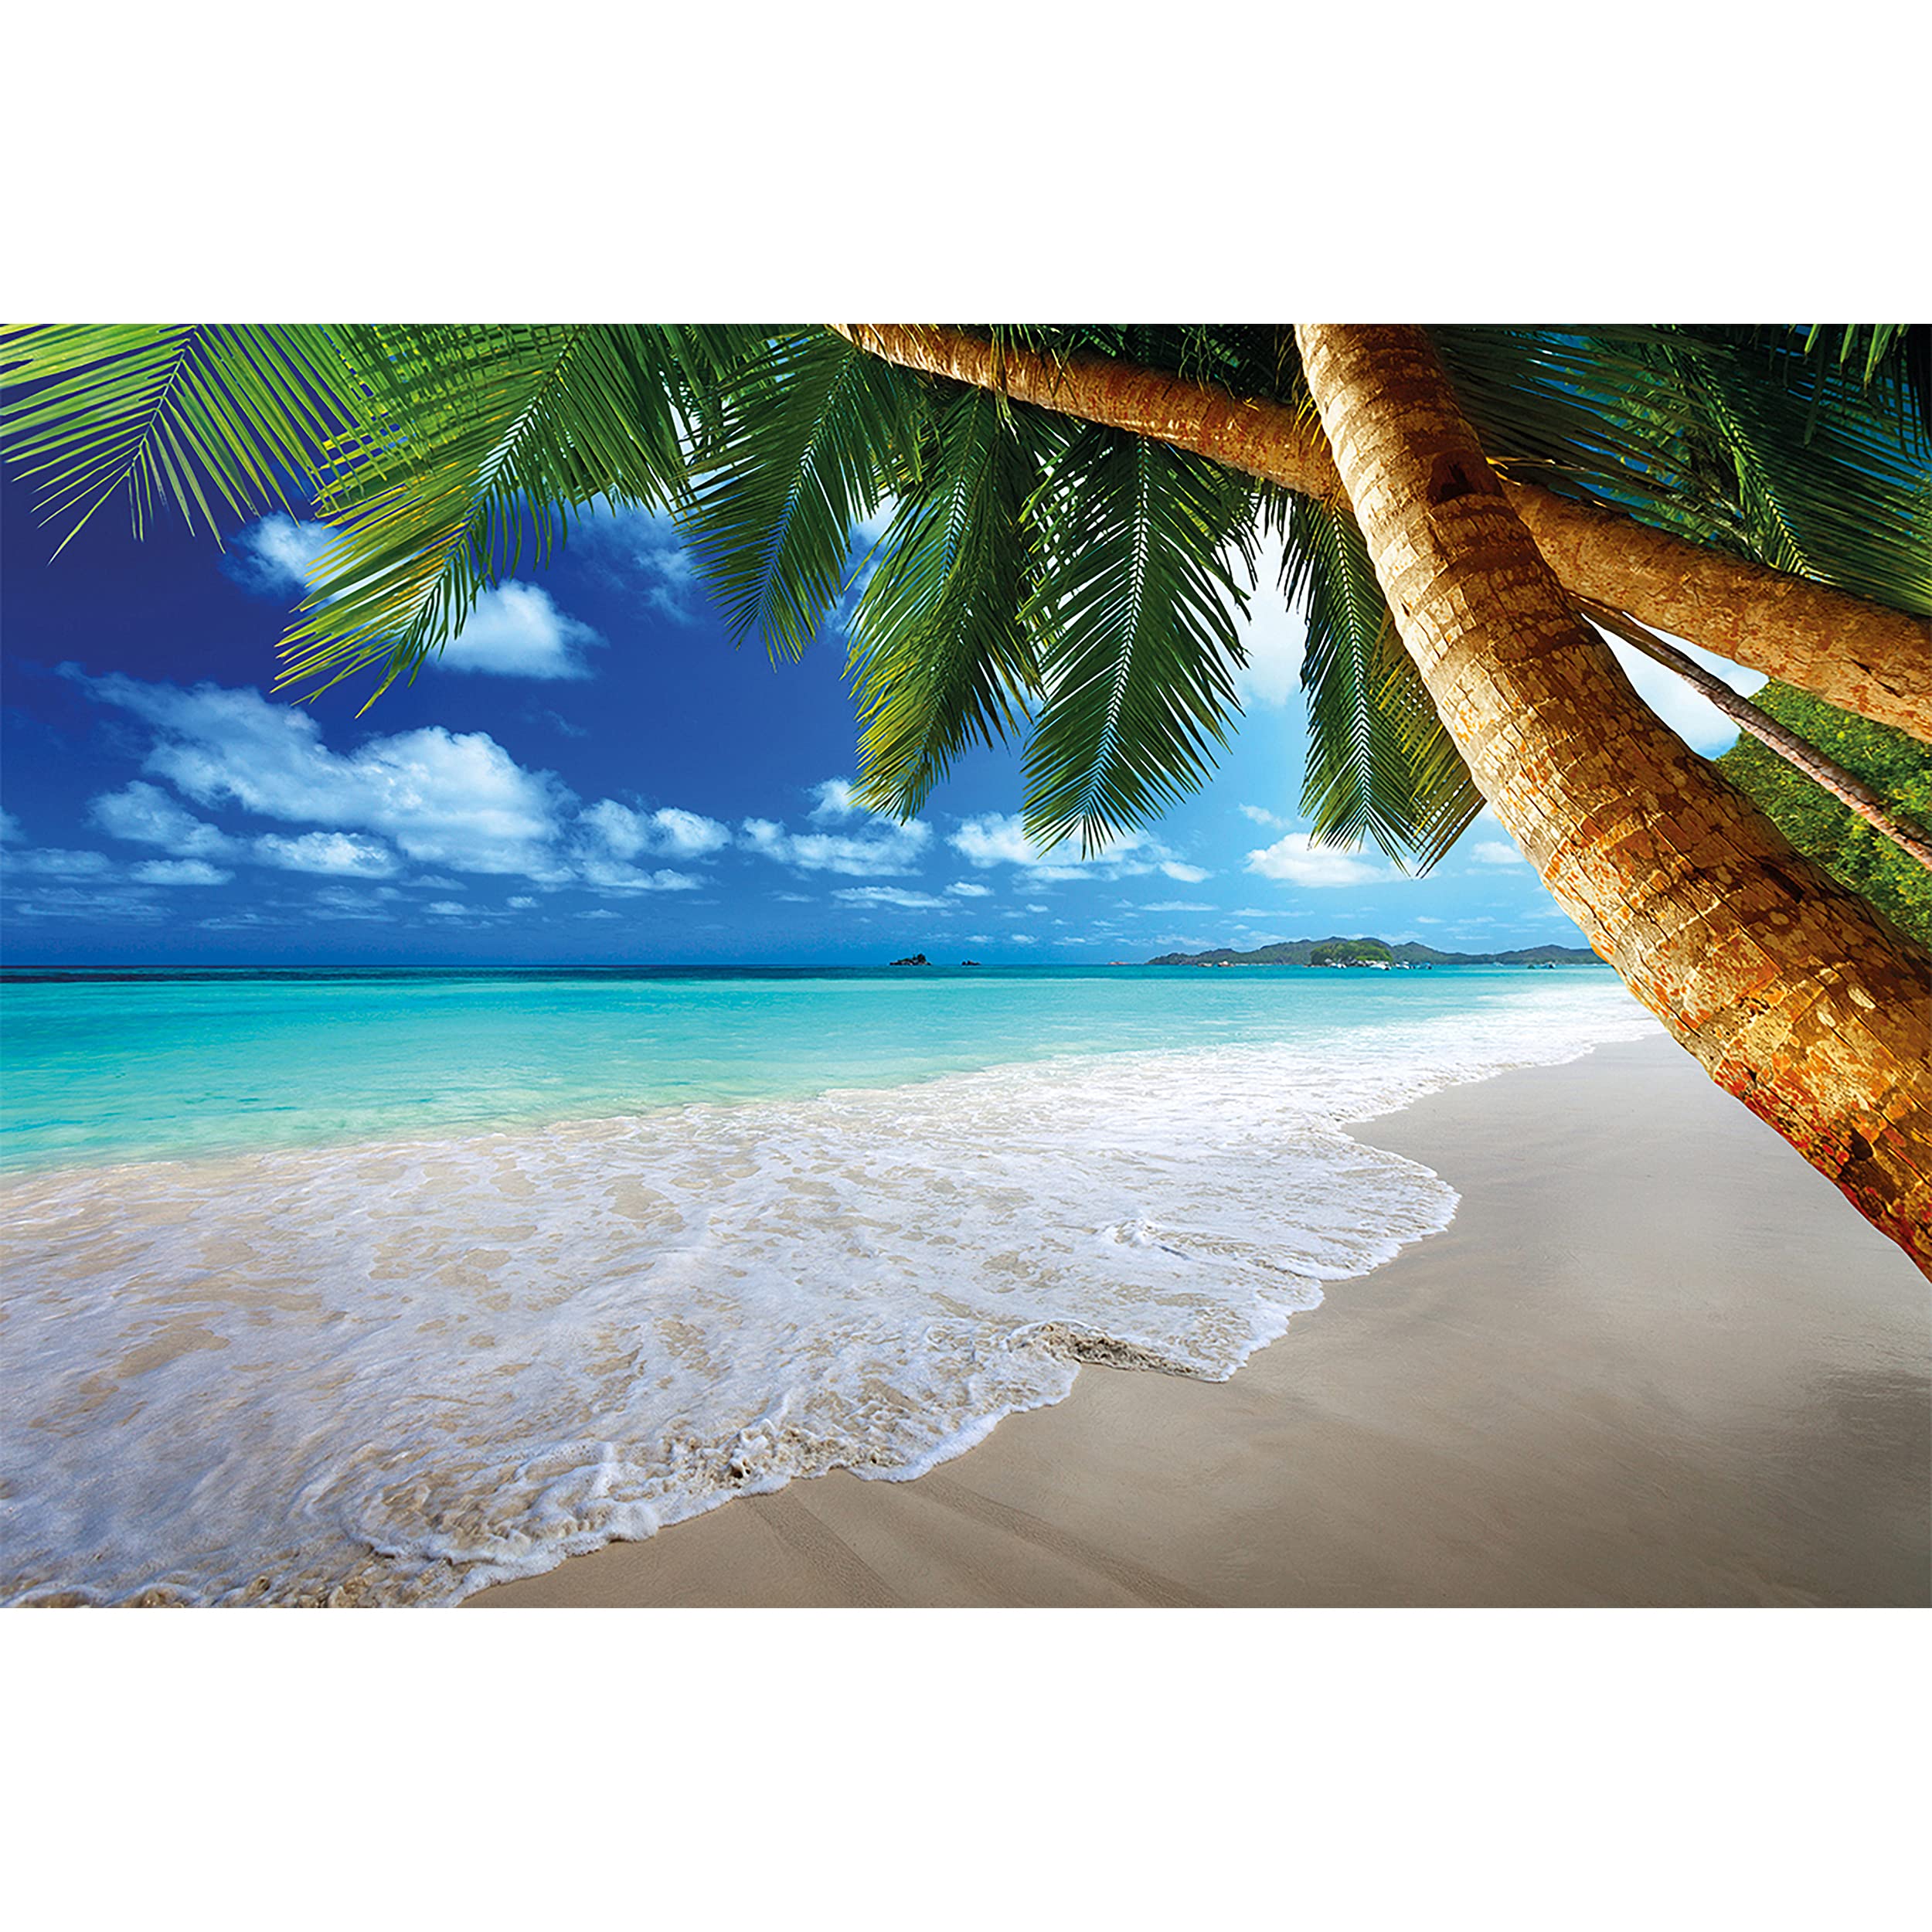 Large Photo Wallpaper Wallpaper – Palm Trees Beach – Decoration Caribbean Bay Tropic Paradise Nature Island Palms Tropical Isle Landscape Image Dec...